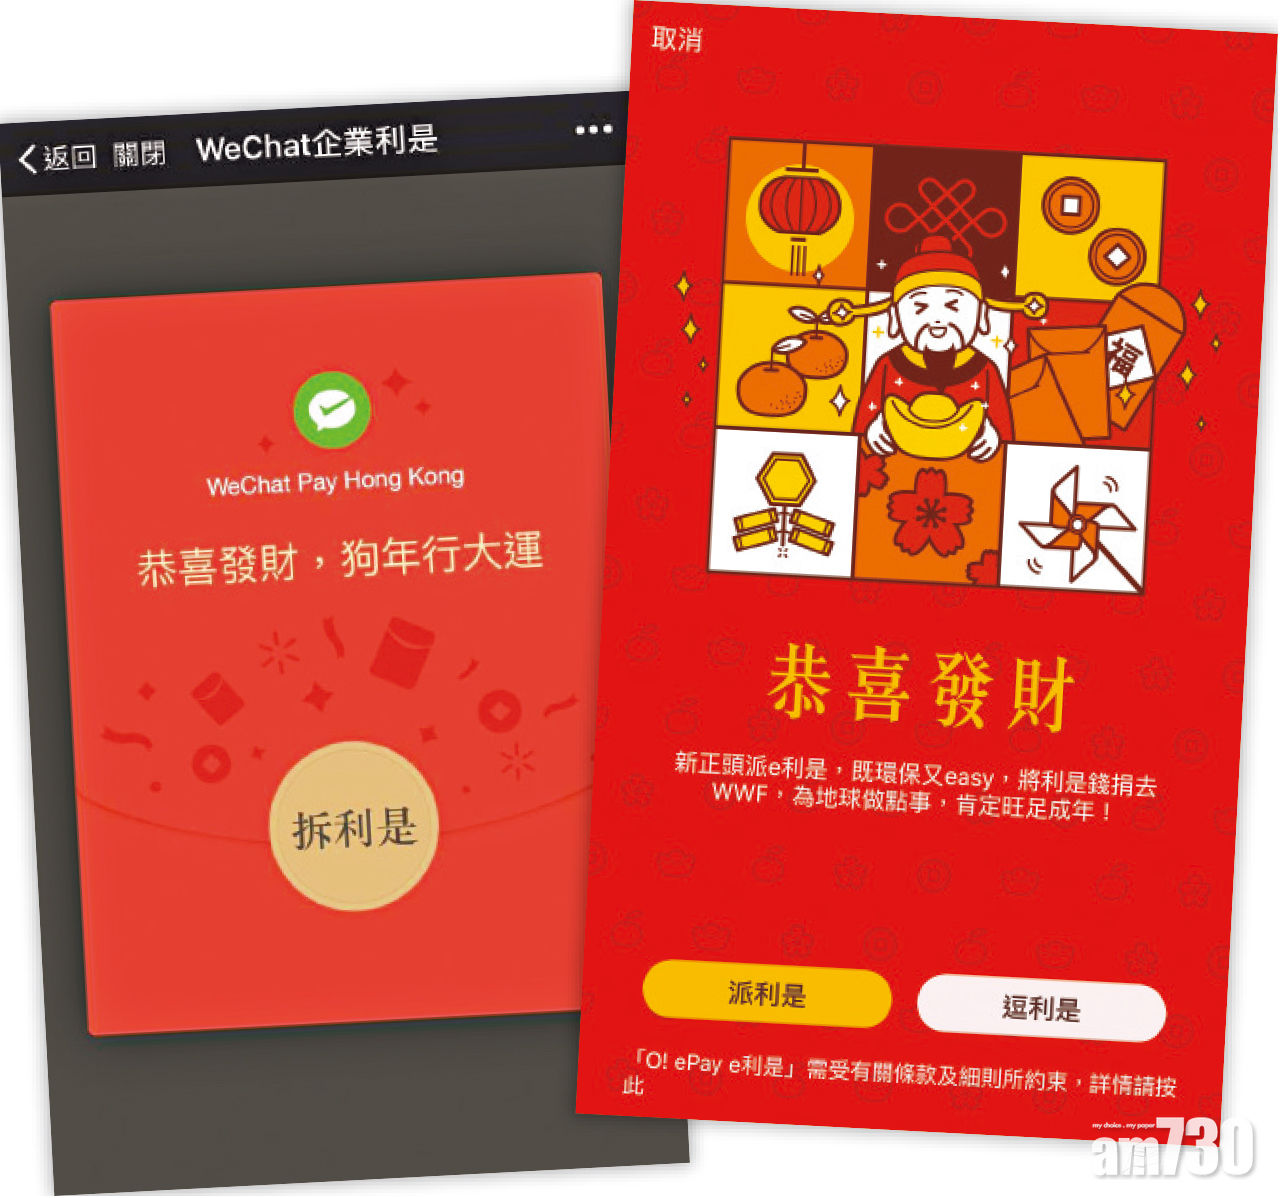 wechat-pay-hk3